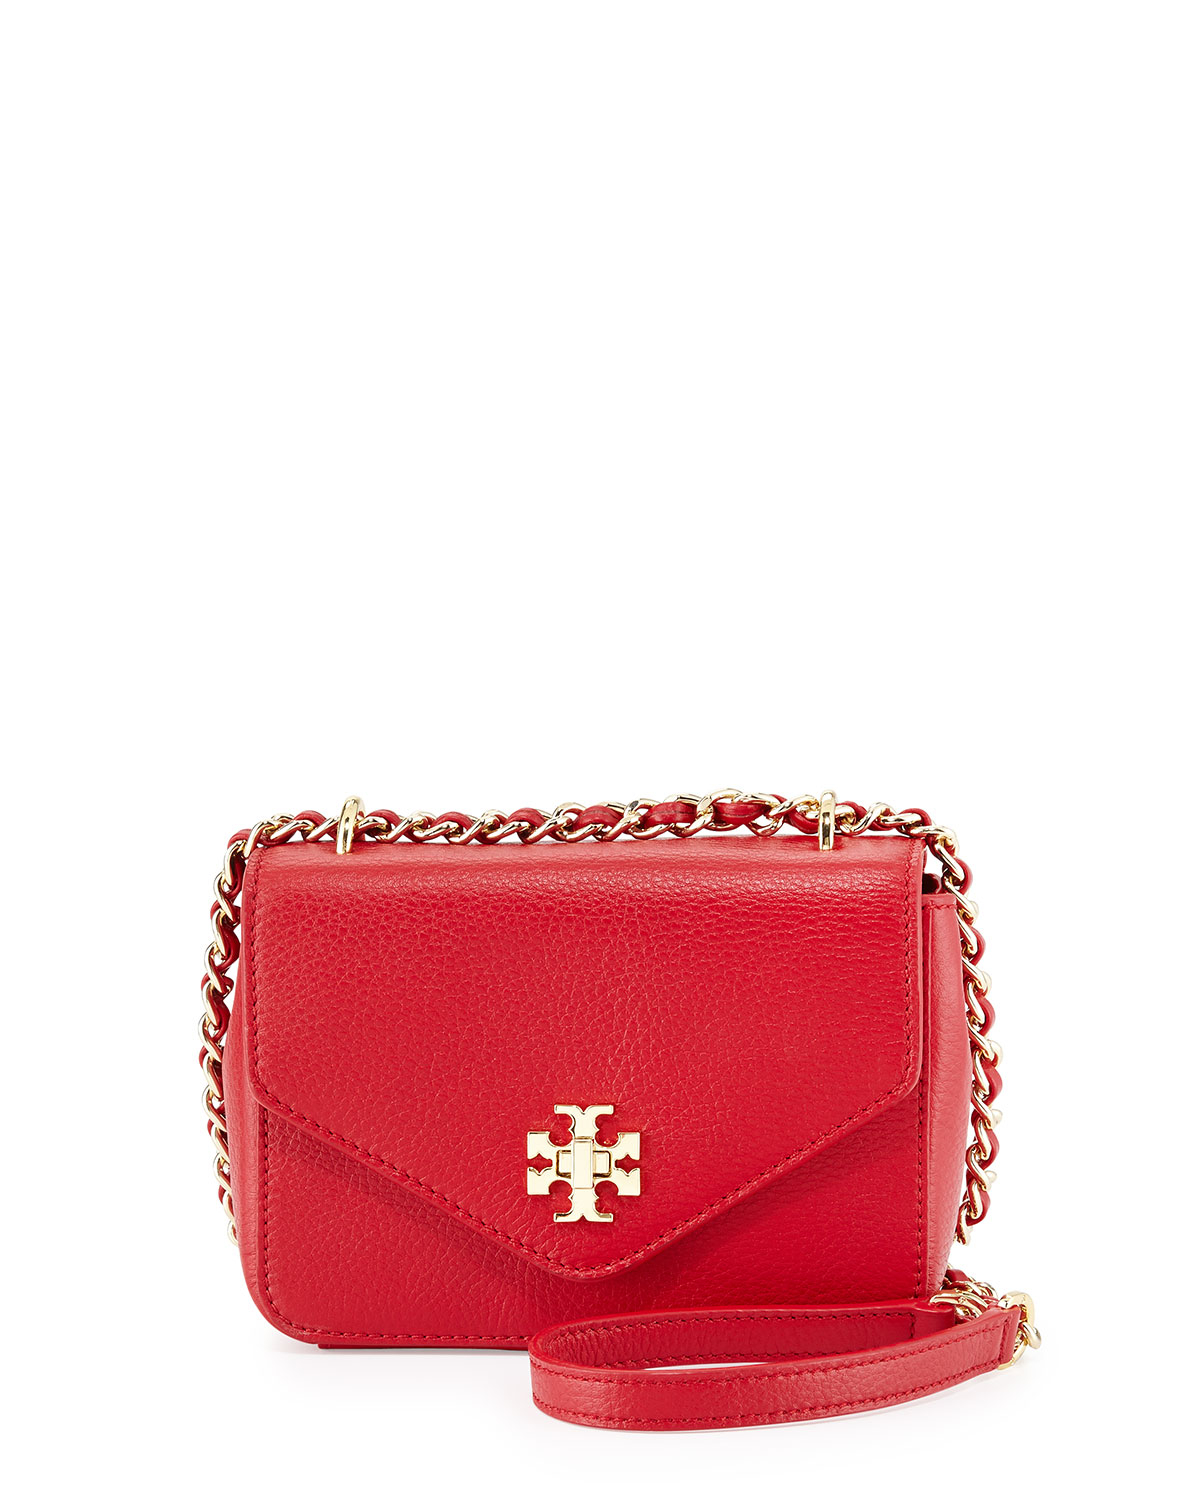 Tory burch Kira Mini Chain-Strap Crossbody Bag in Red (KIR ROYALE) | Lyst